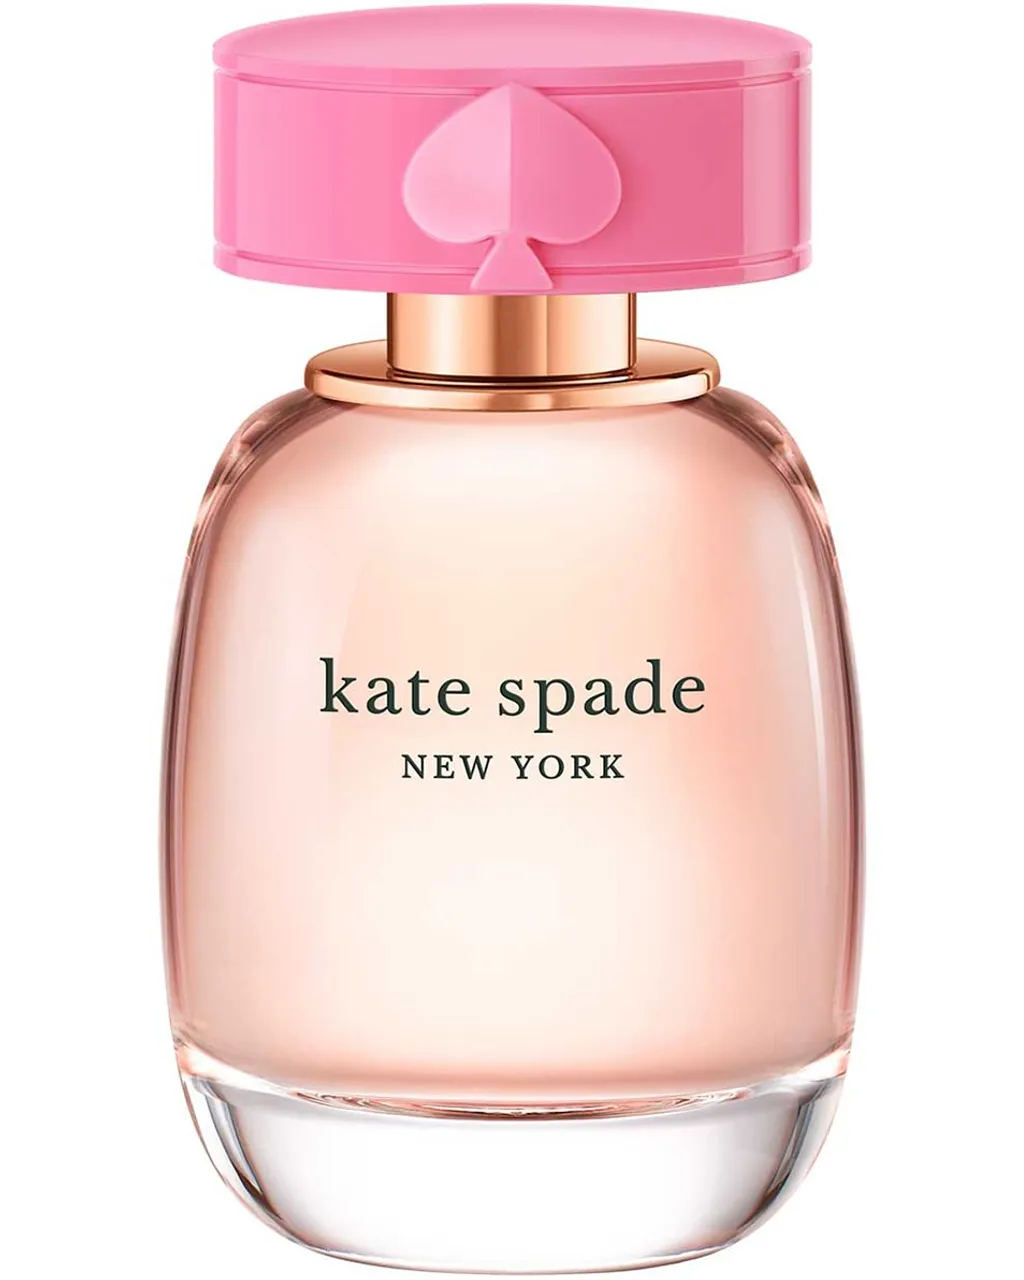 Kate Spade New York EAU DE PARFUM 60 ML